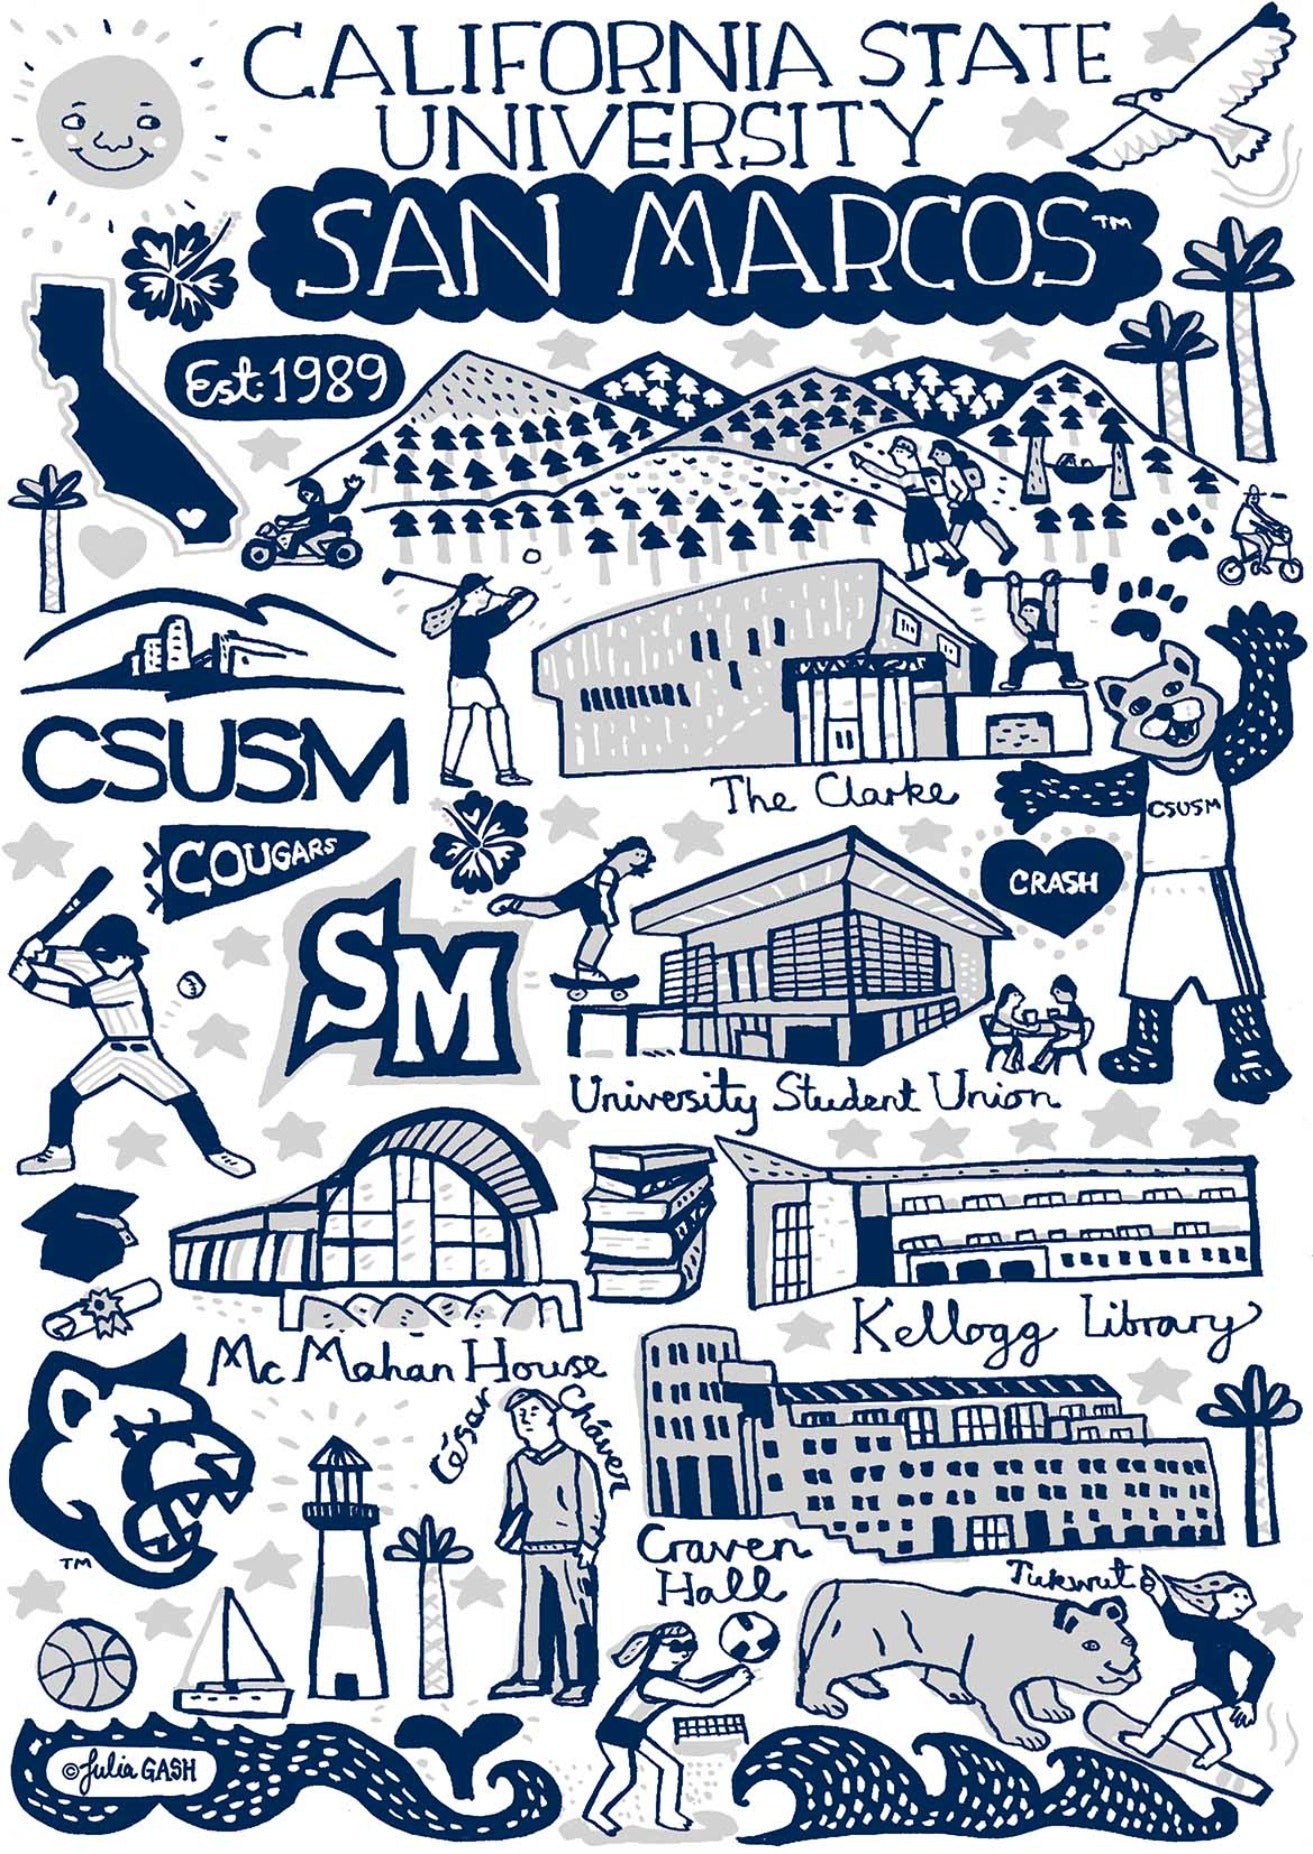 California State University - San Marcos by Julia Gash